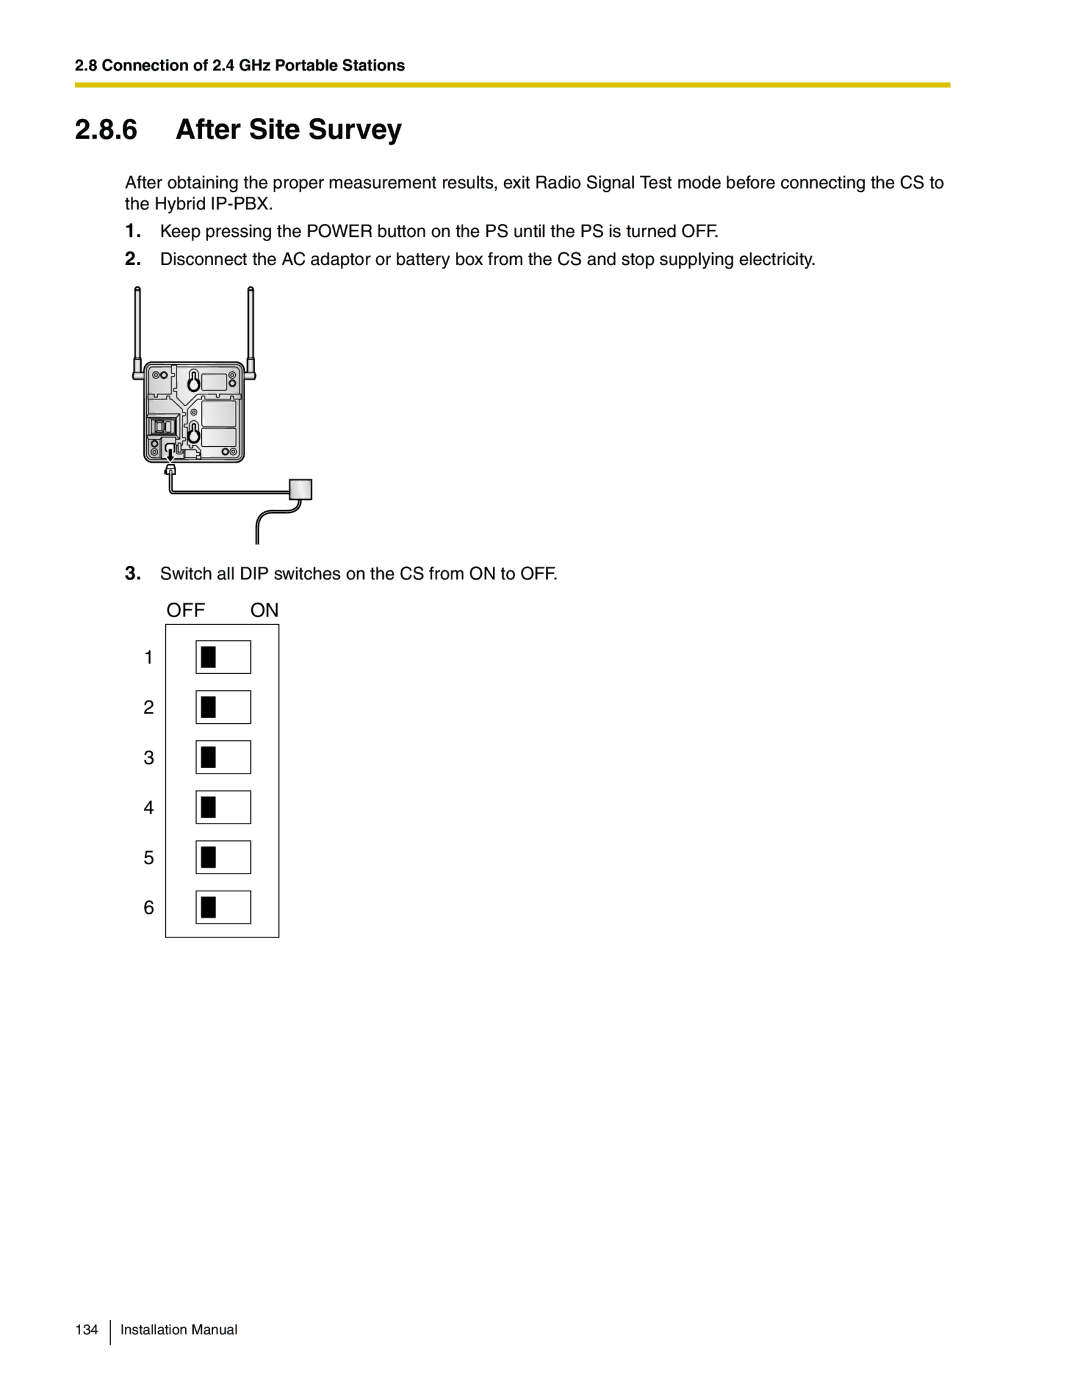 Panasonic KX-TDA100 installation manual After Site Survey 